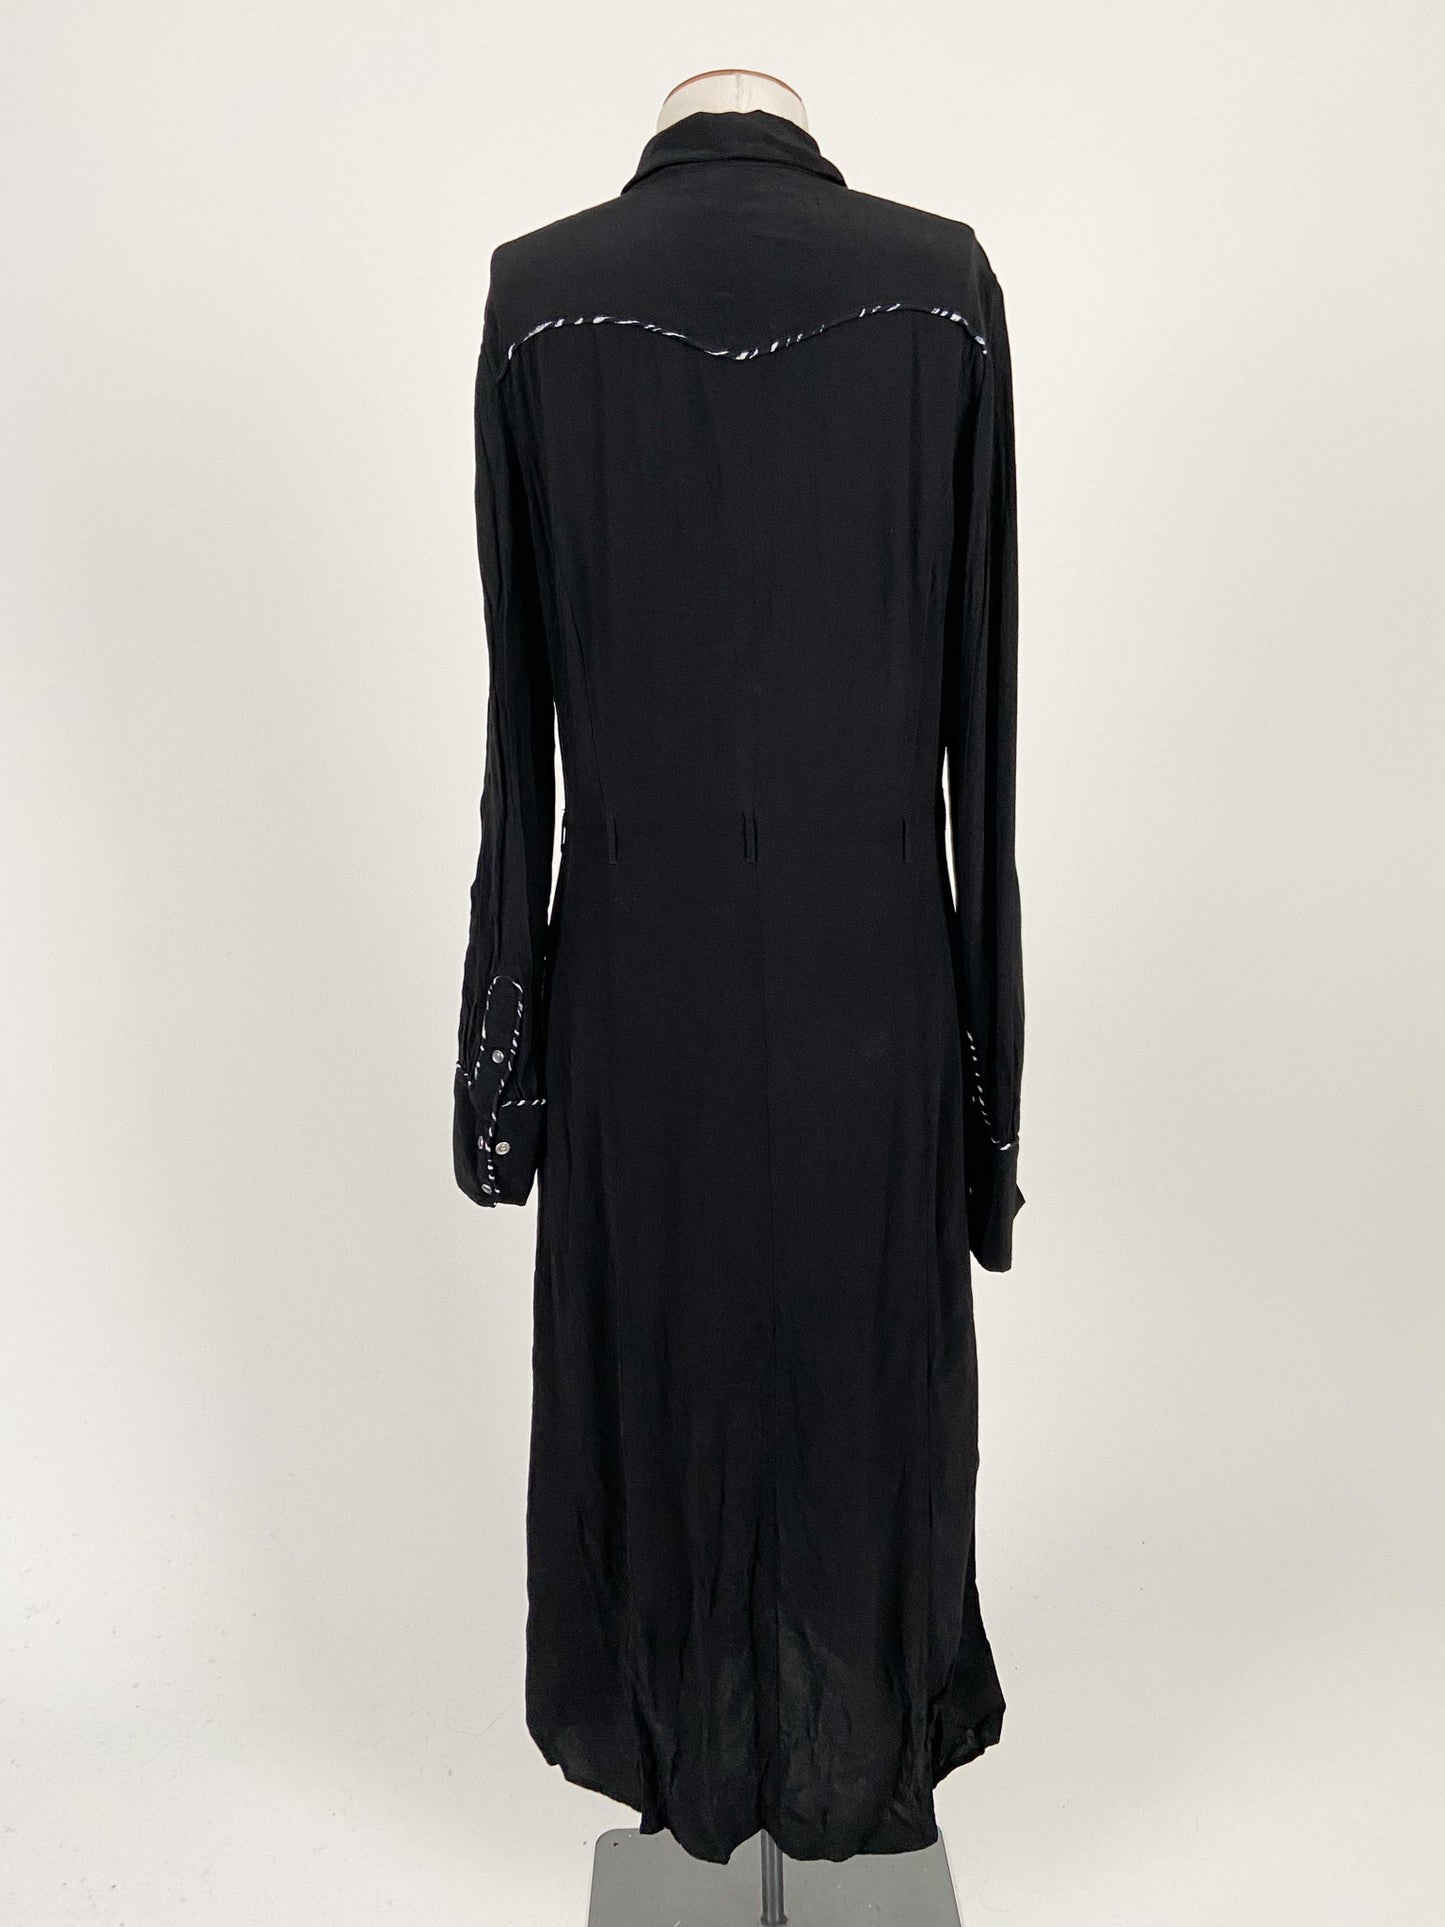 H&M | Black Formal/Workwear Dress | Size 10